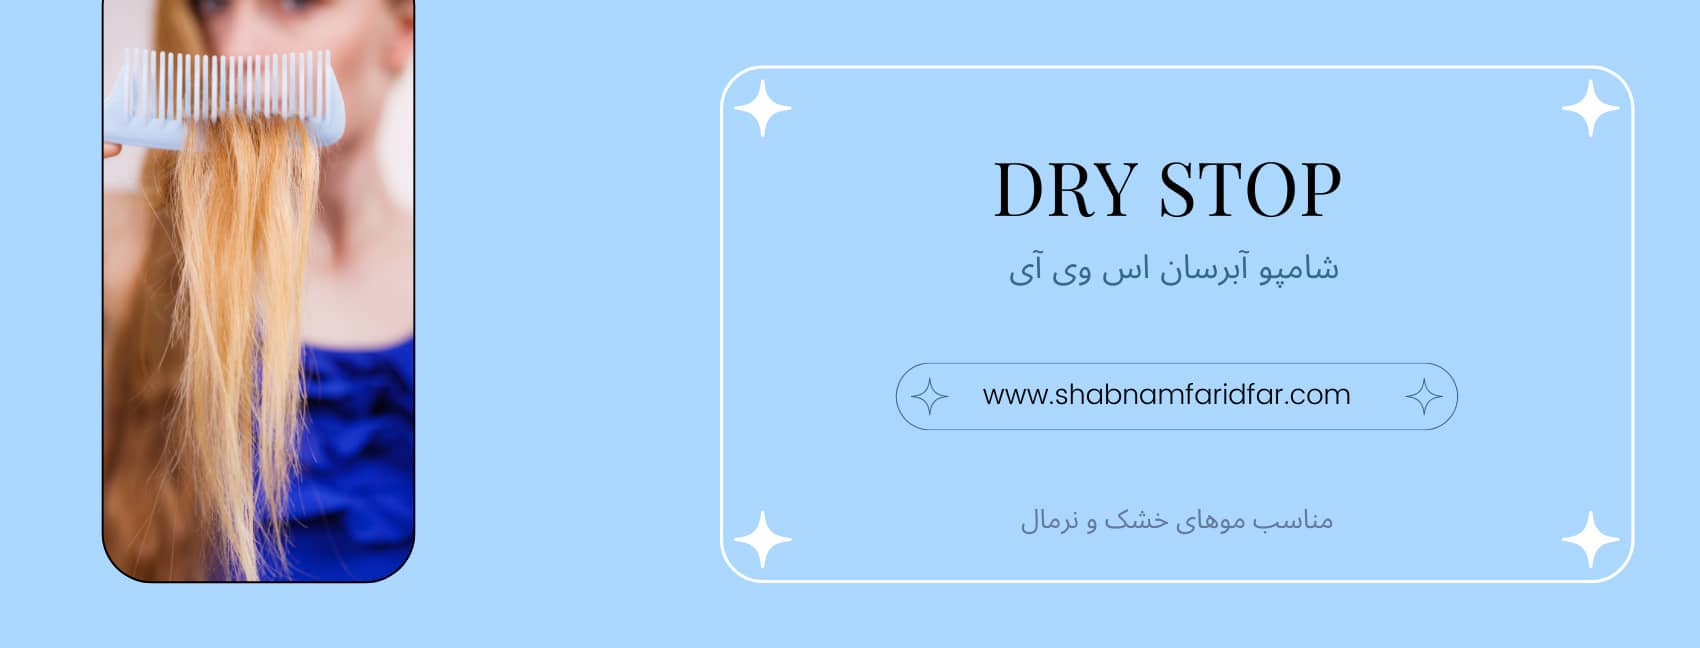 dry stop shampoo1